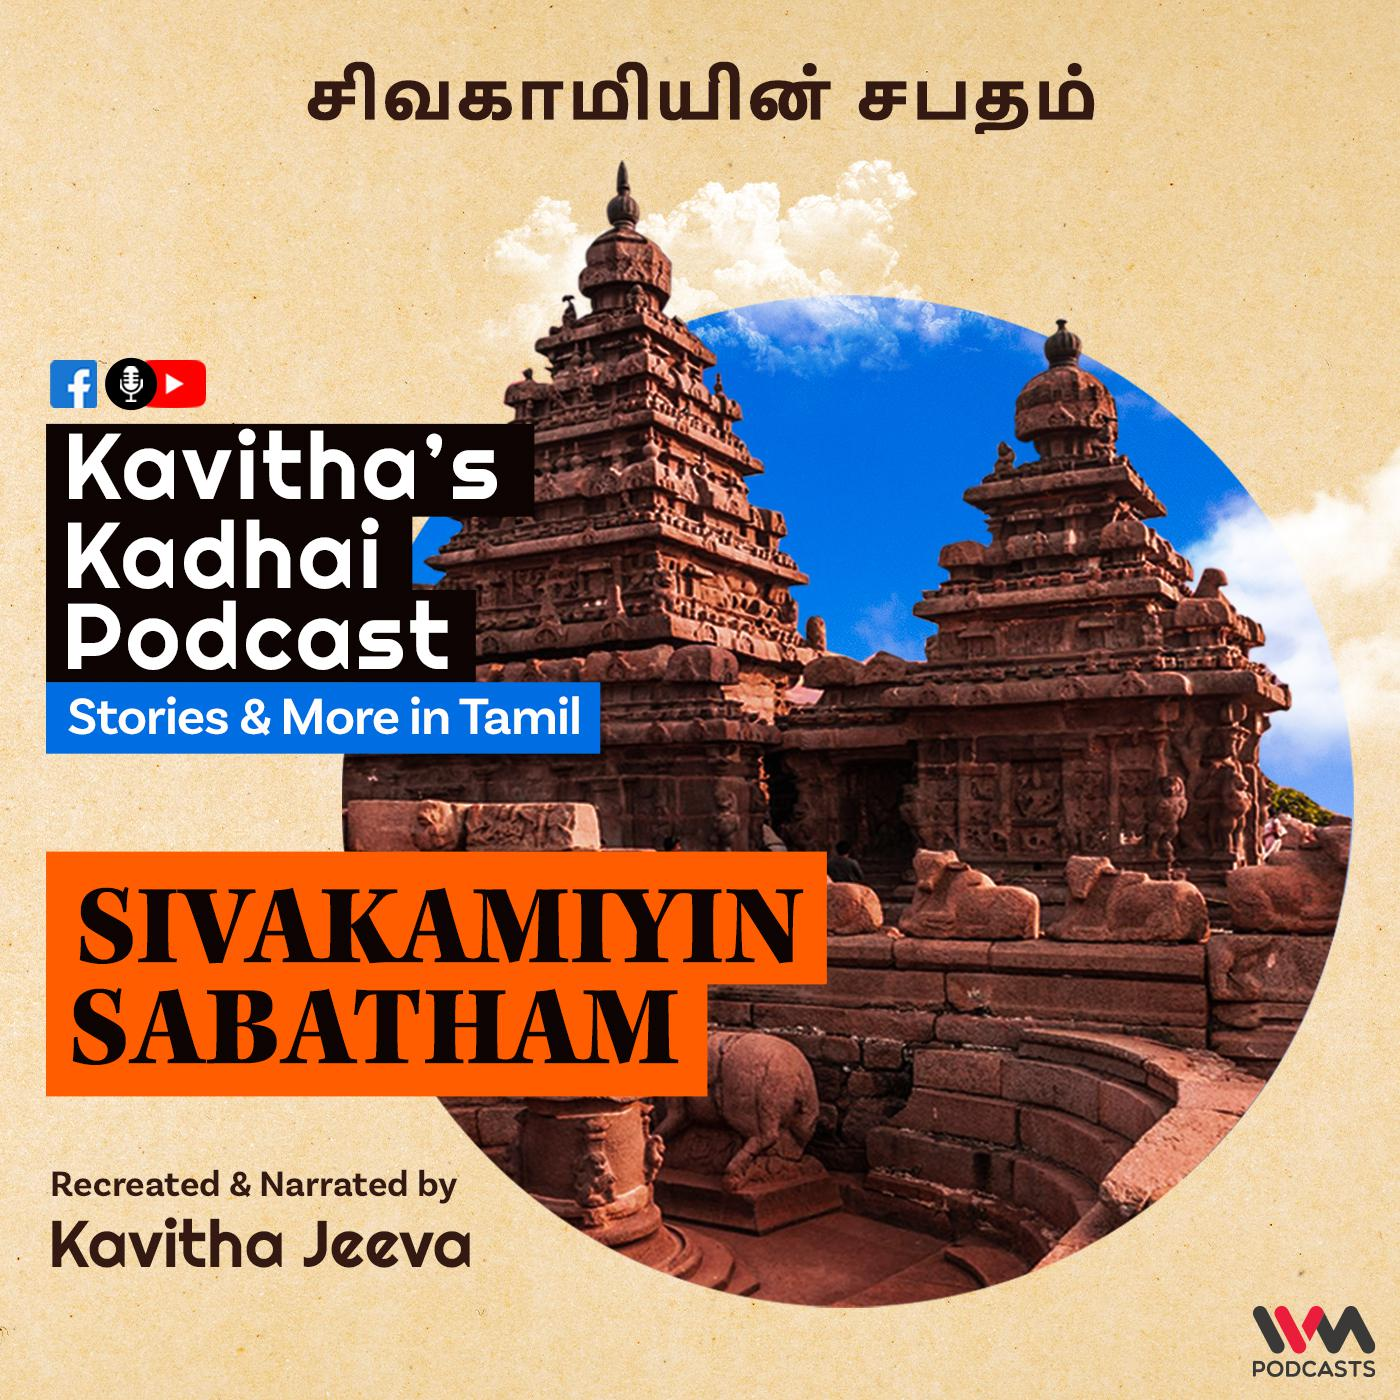 KadhaiPodcast's Sivakamiyin Sabatham with Kavitha Jeeva - Episode #138